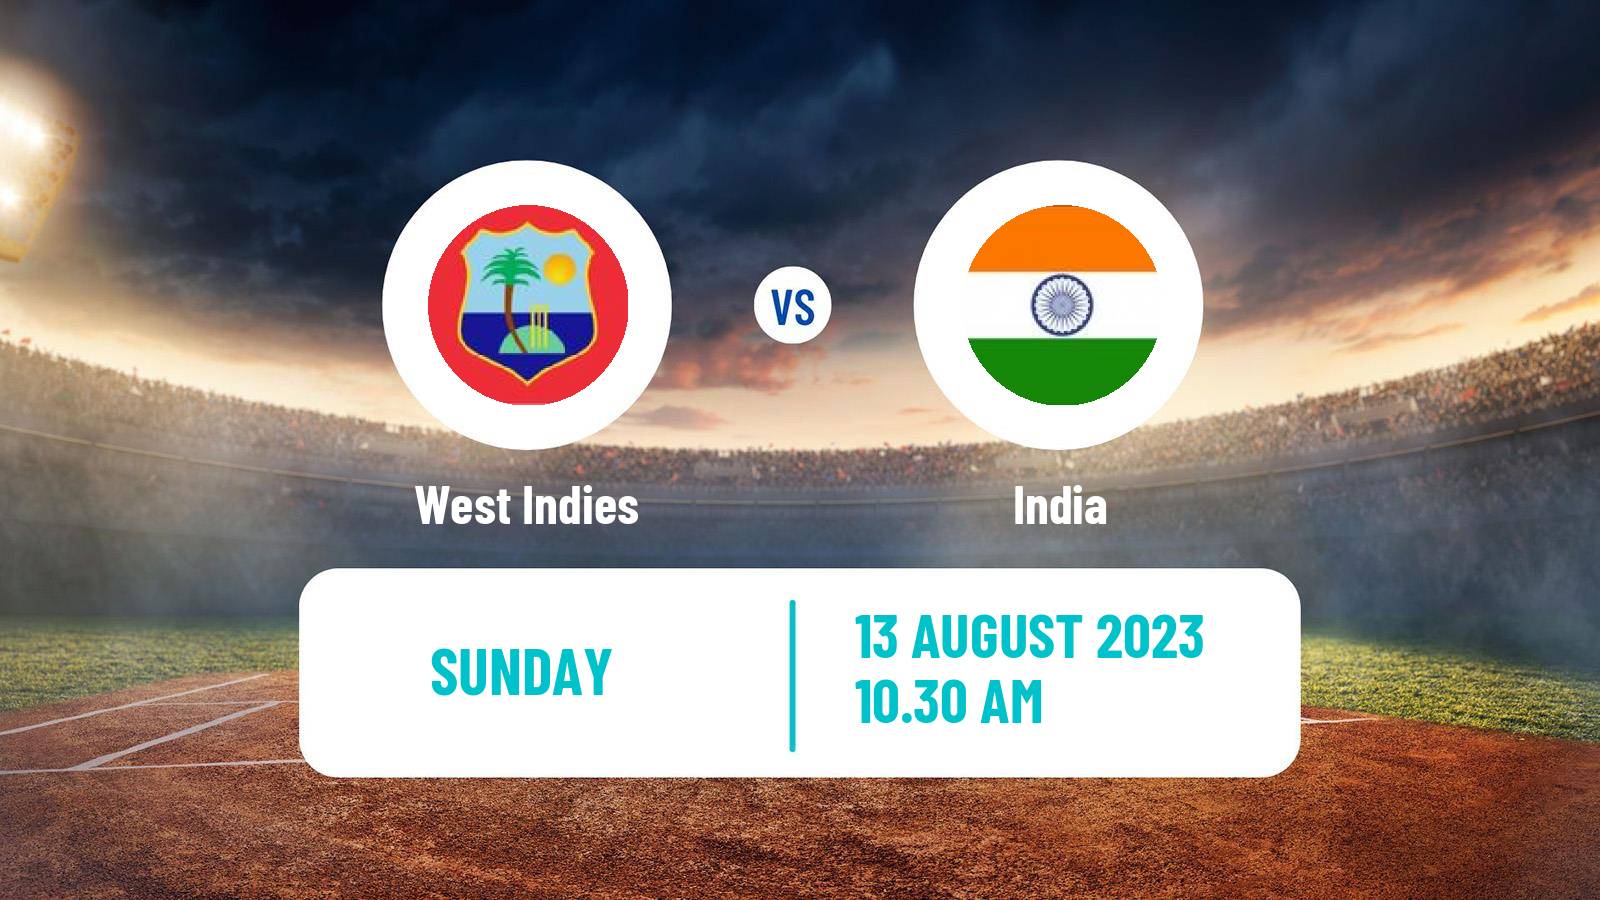 Cricket Twenty20 International West Indies - India